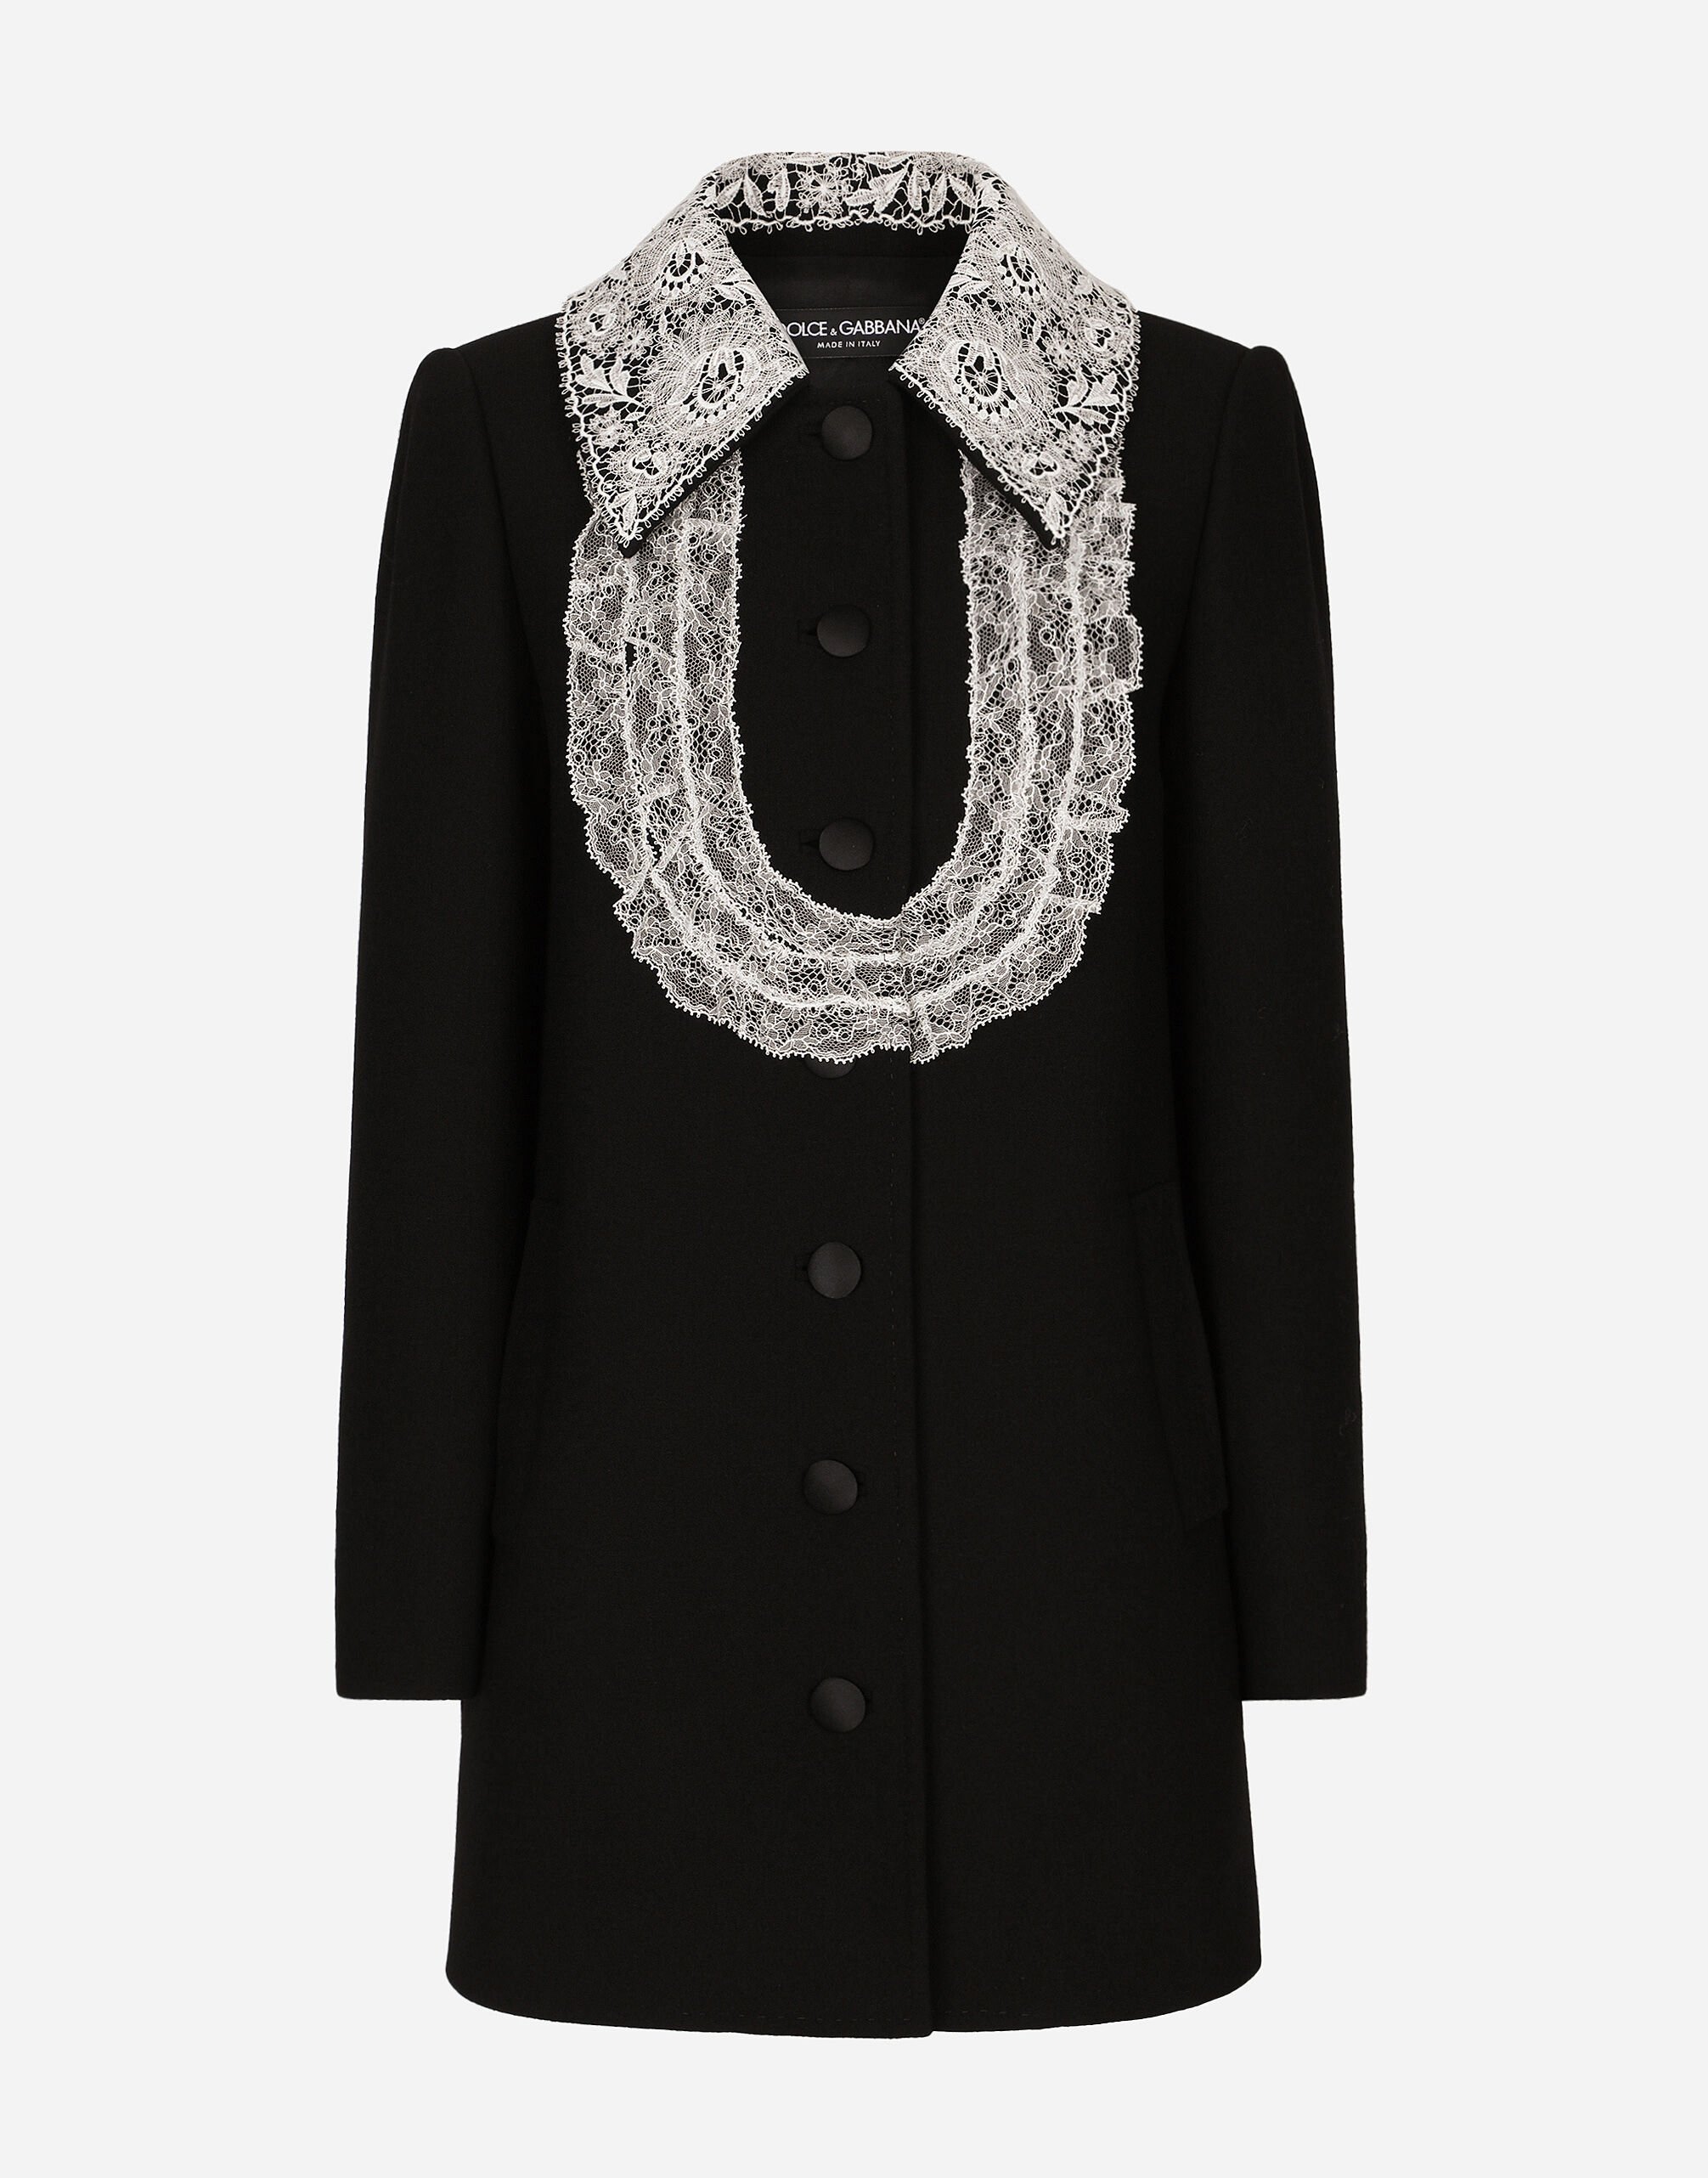 Dolce & Gabbana Short wool coat with lace details Black F0D1OTFUMG9